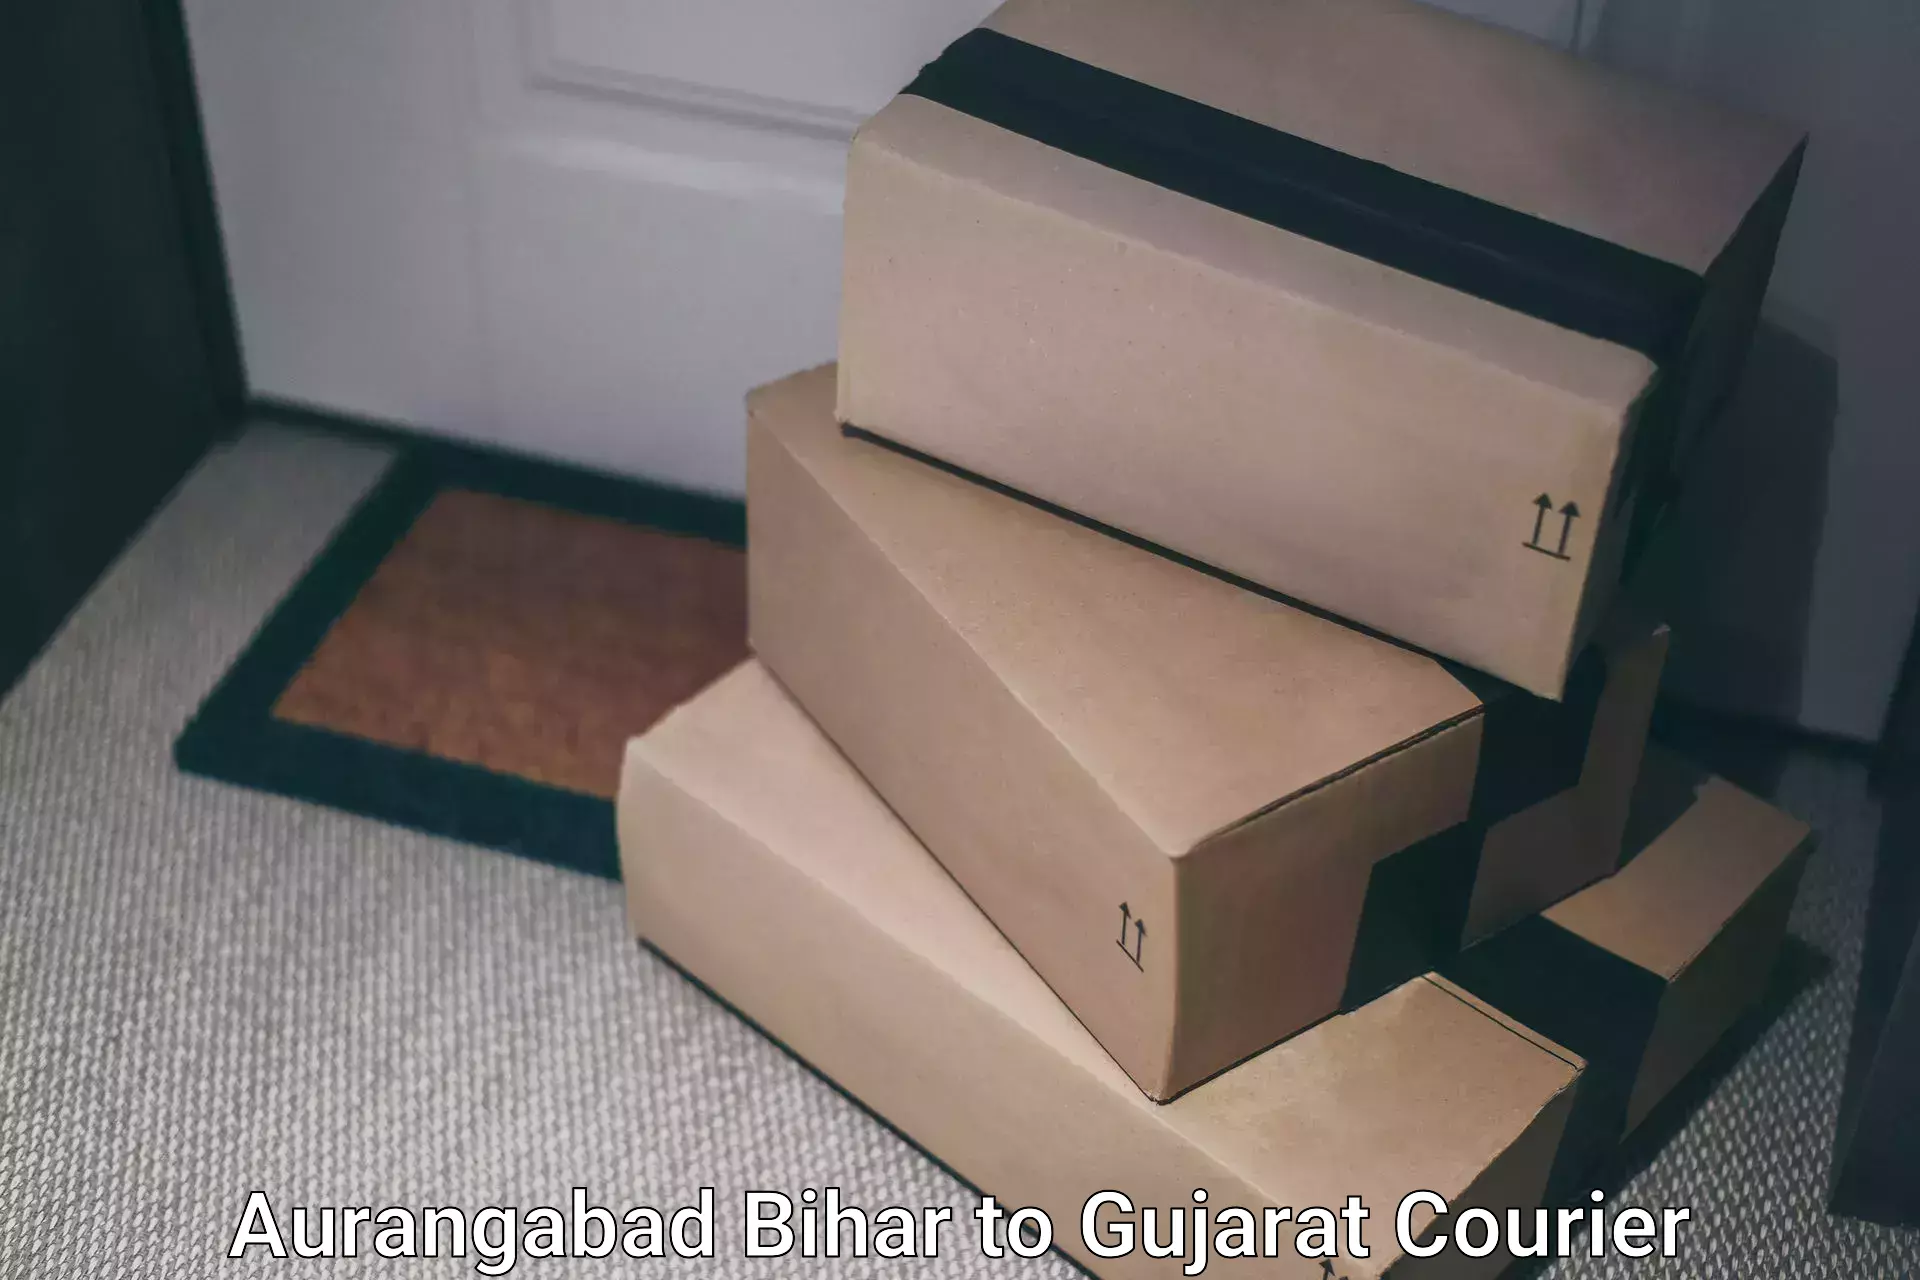 Package delivery network Aurangabad Bihar to Vijapur